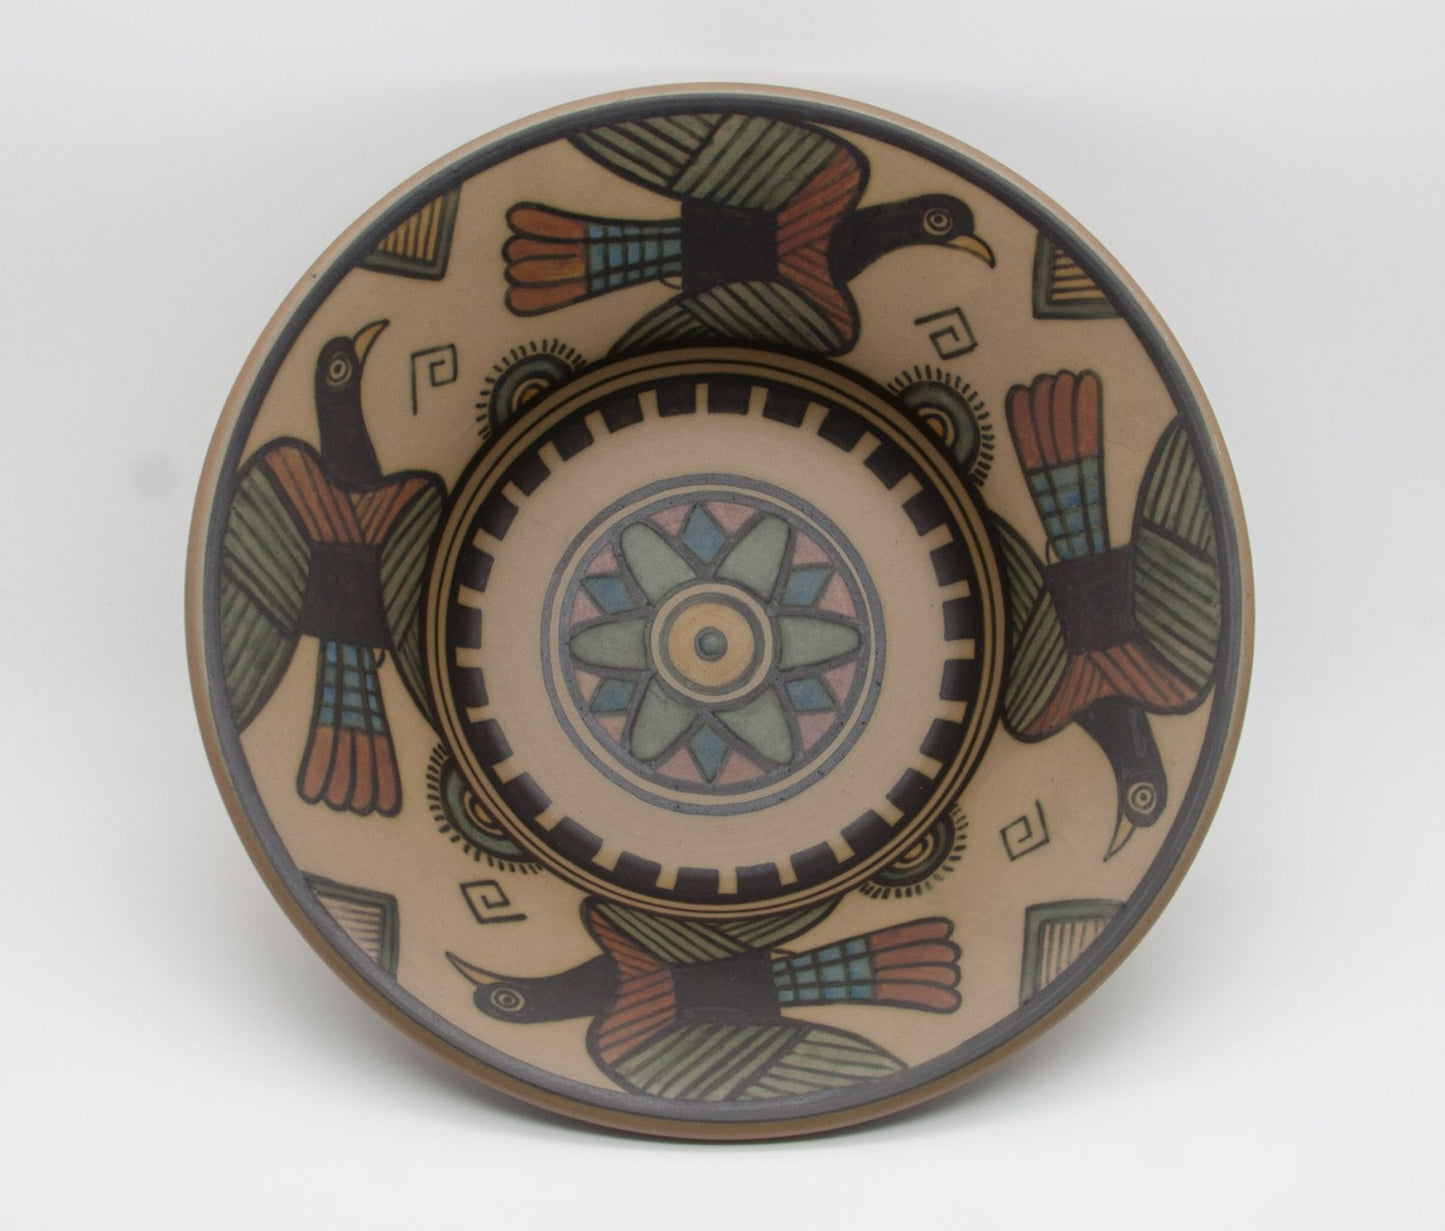 L. HJORTH Decorated Stylized Bird Ceramic Bowl Mollaris.com 